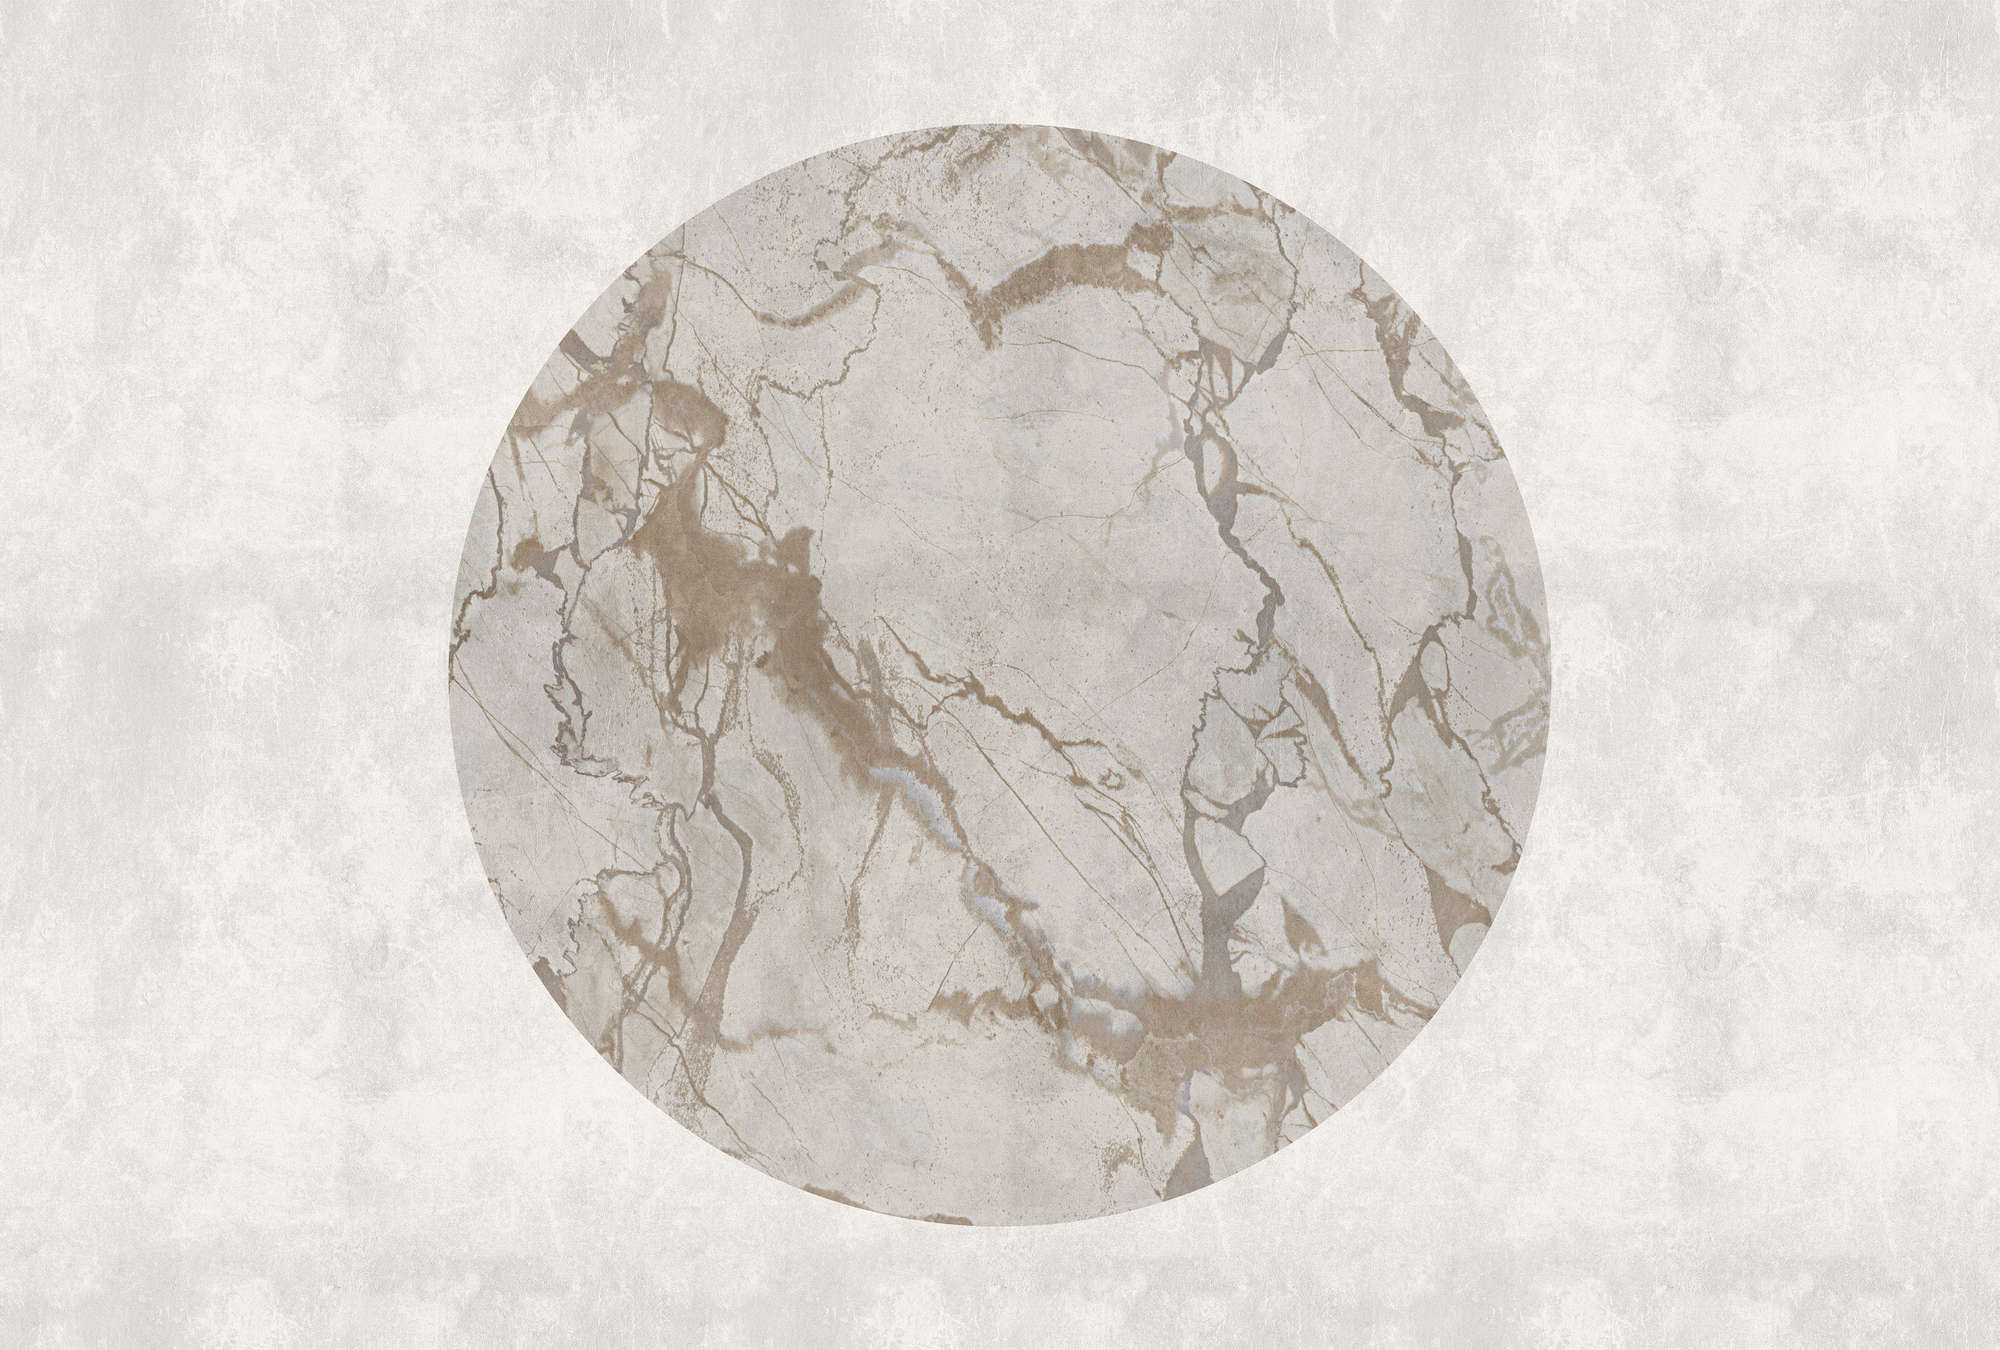             Mercurio 2 – Fototapete Greige Steinoptik mit Marmor-Effekt
        